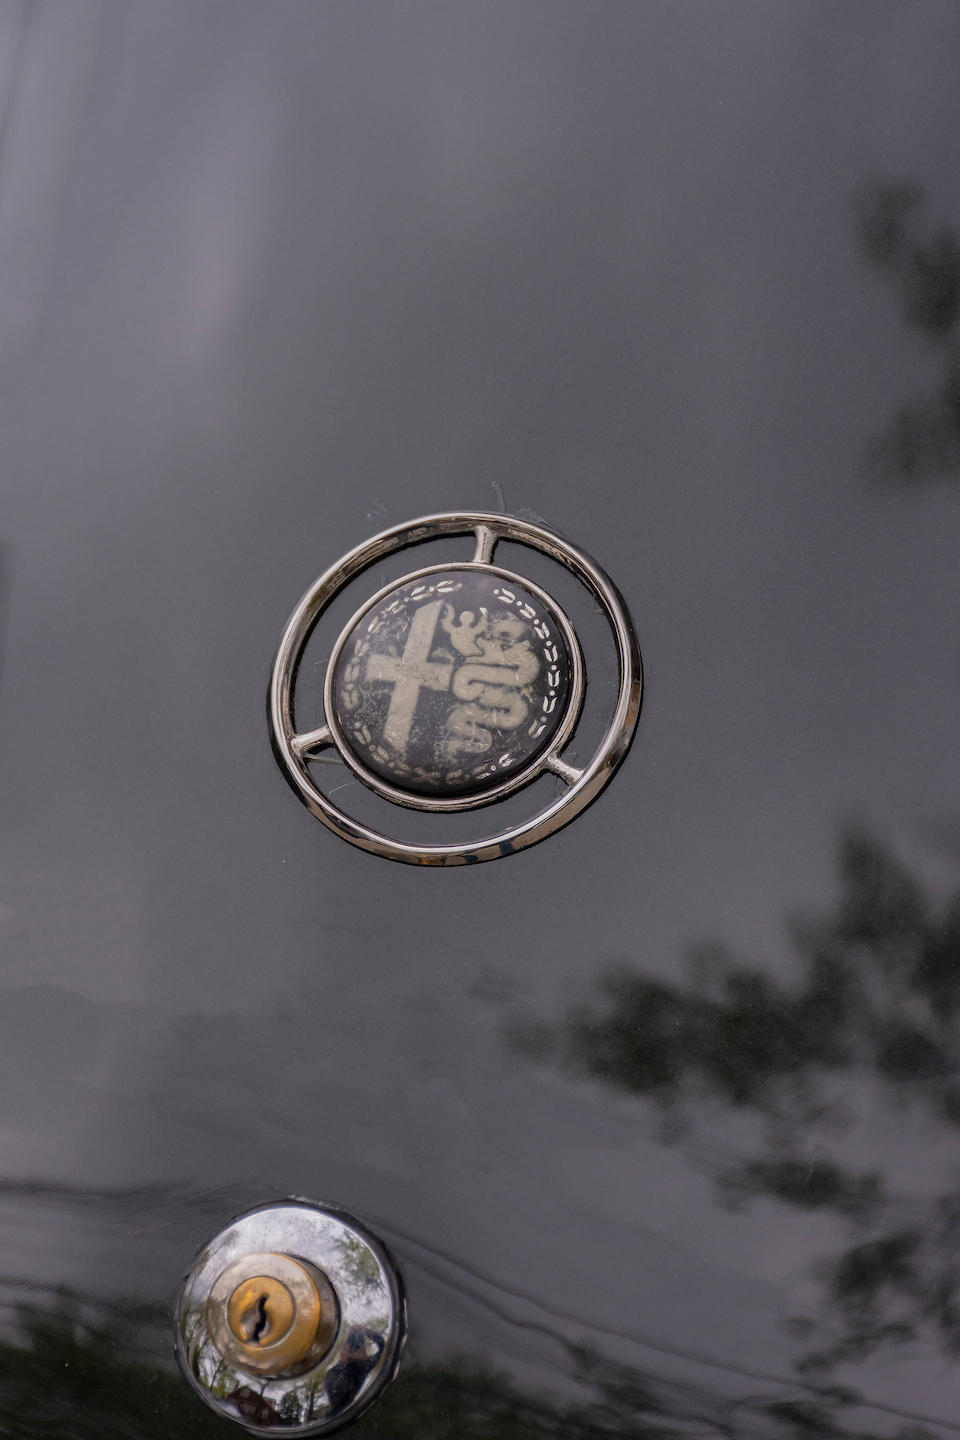 <b>1964 Alfa Romeo Giulia Sprint Speciale</b><br />Chassis no. AR 381122<br />Engine no. AR00121*0133 (see text)